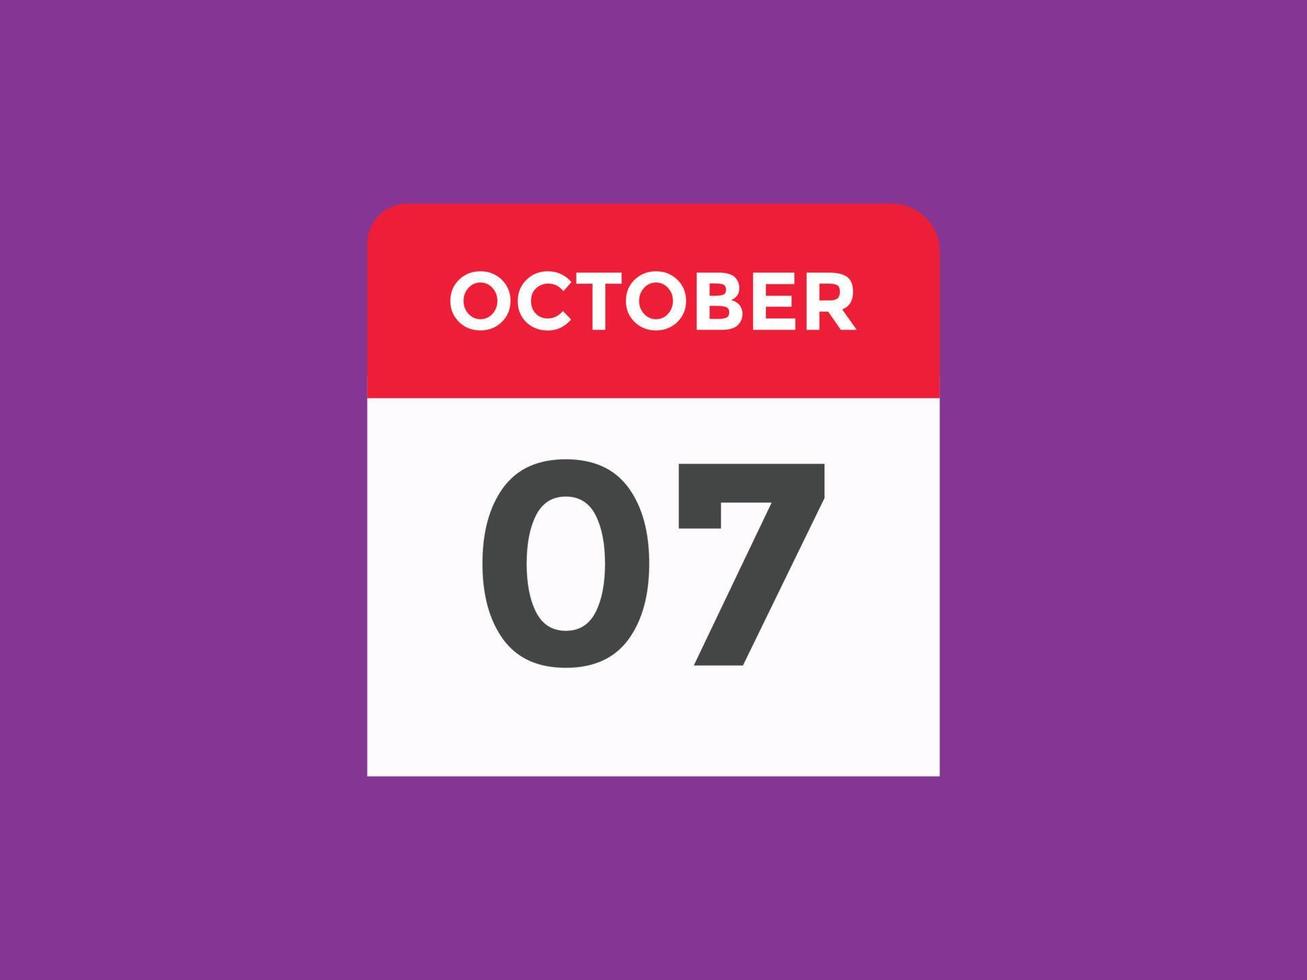 october 7 calendar reminder. 7th october daily calendar icon template. Calendar 7th october icon Design template. Vector illustration